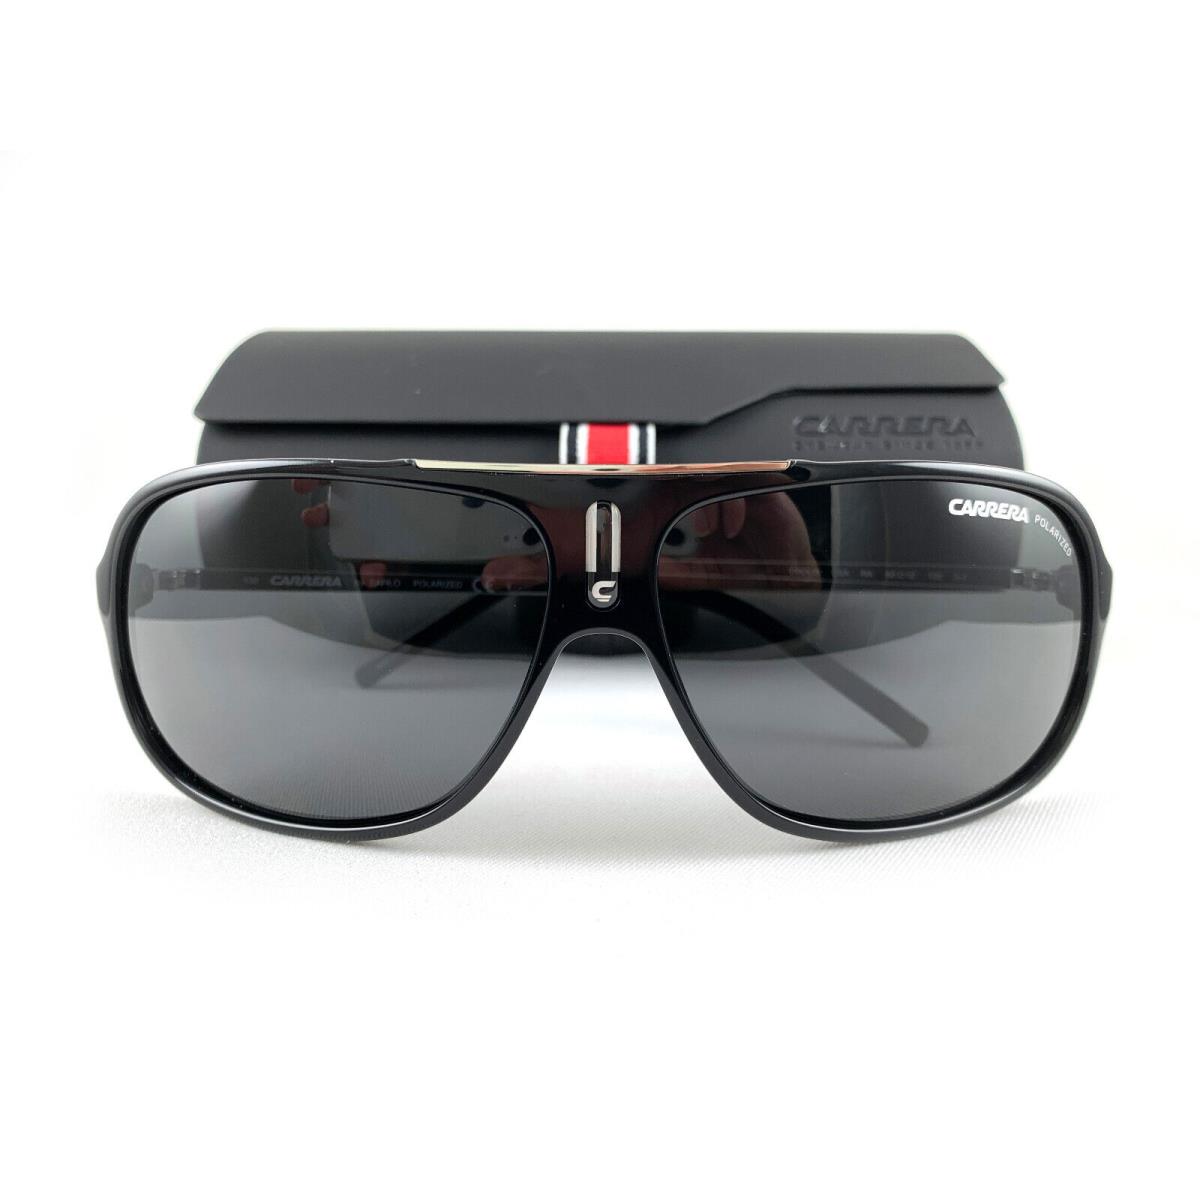 Carrera Sunglasses Cool/s Black Palladium Gray Polarized Csara